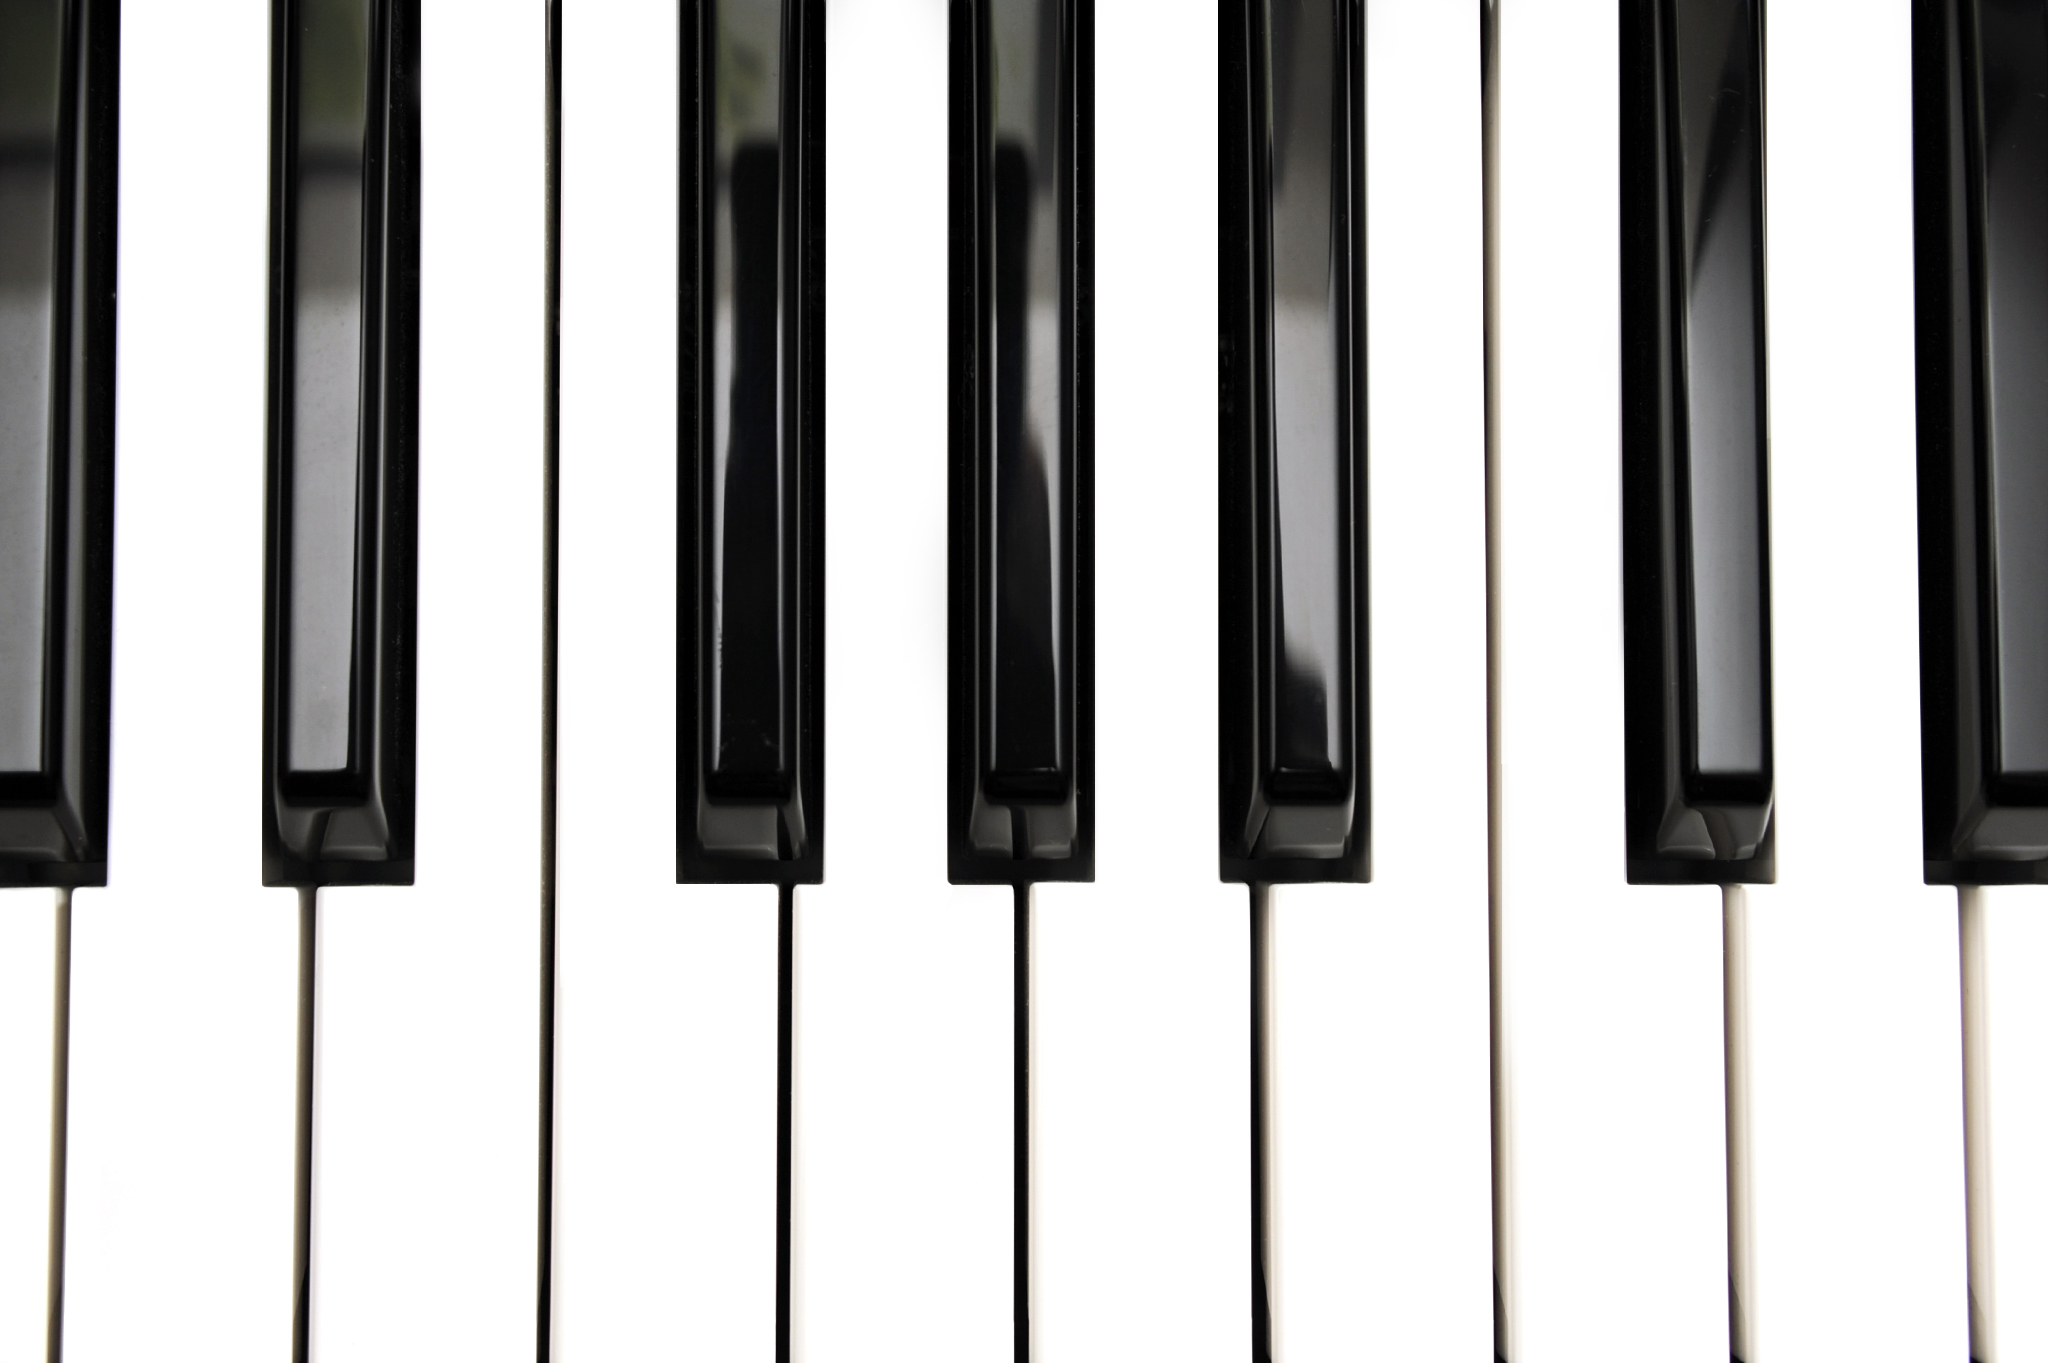 Digital Piano Keys - Freephotosdatabase.com